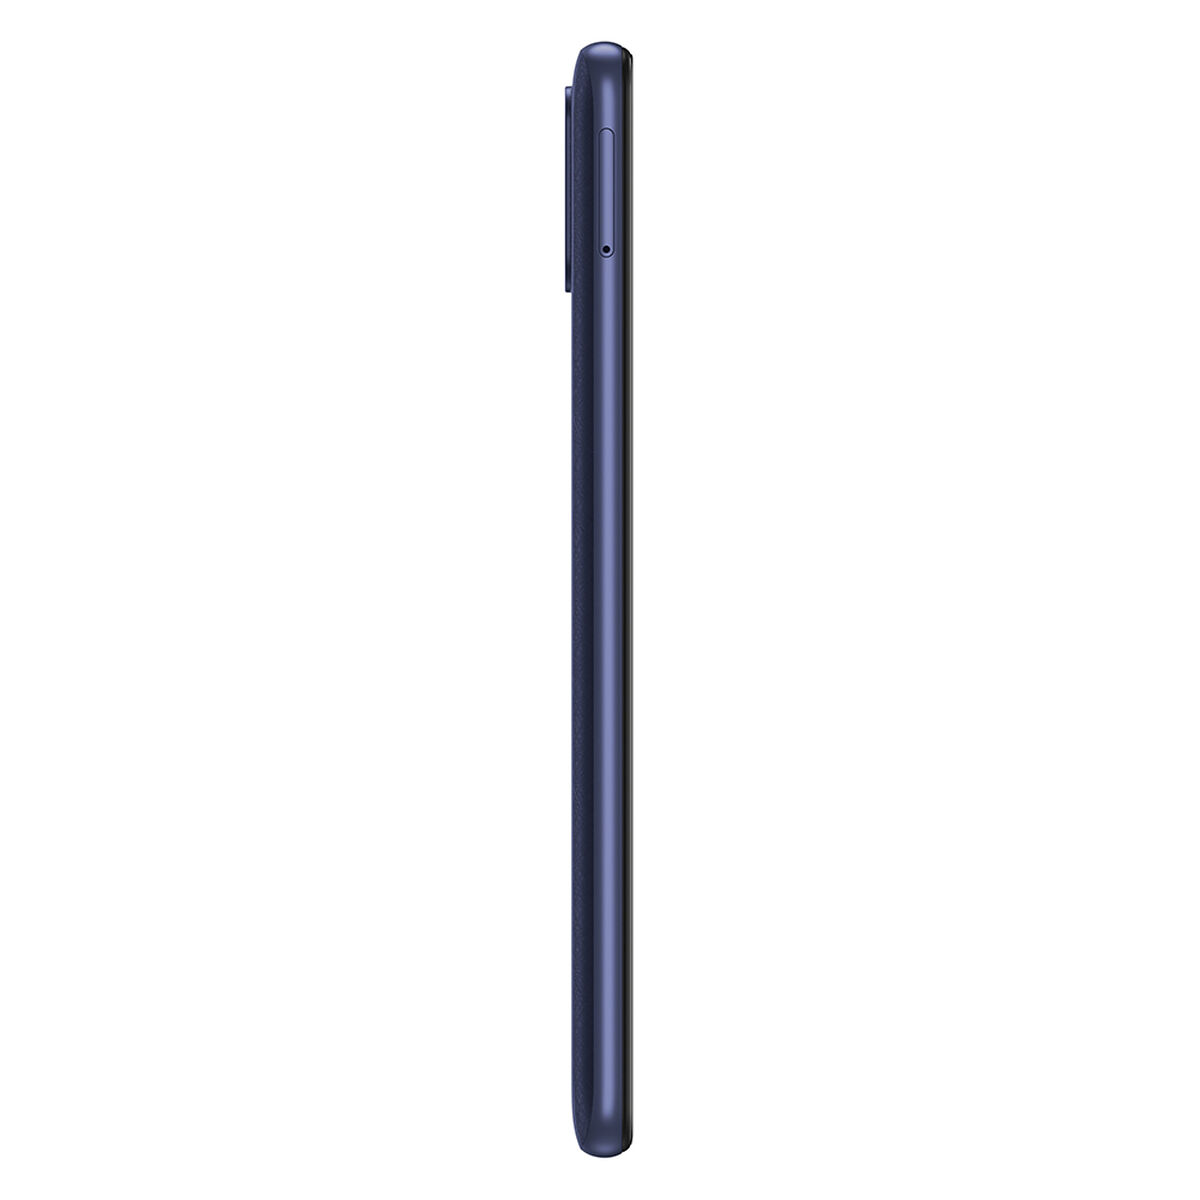 Celular Samsung Galaxy A03 64GB 6,5" Azul Liberado